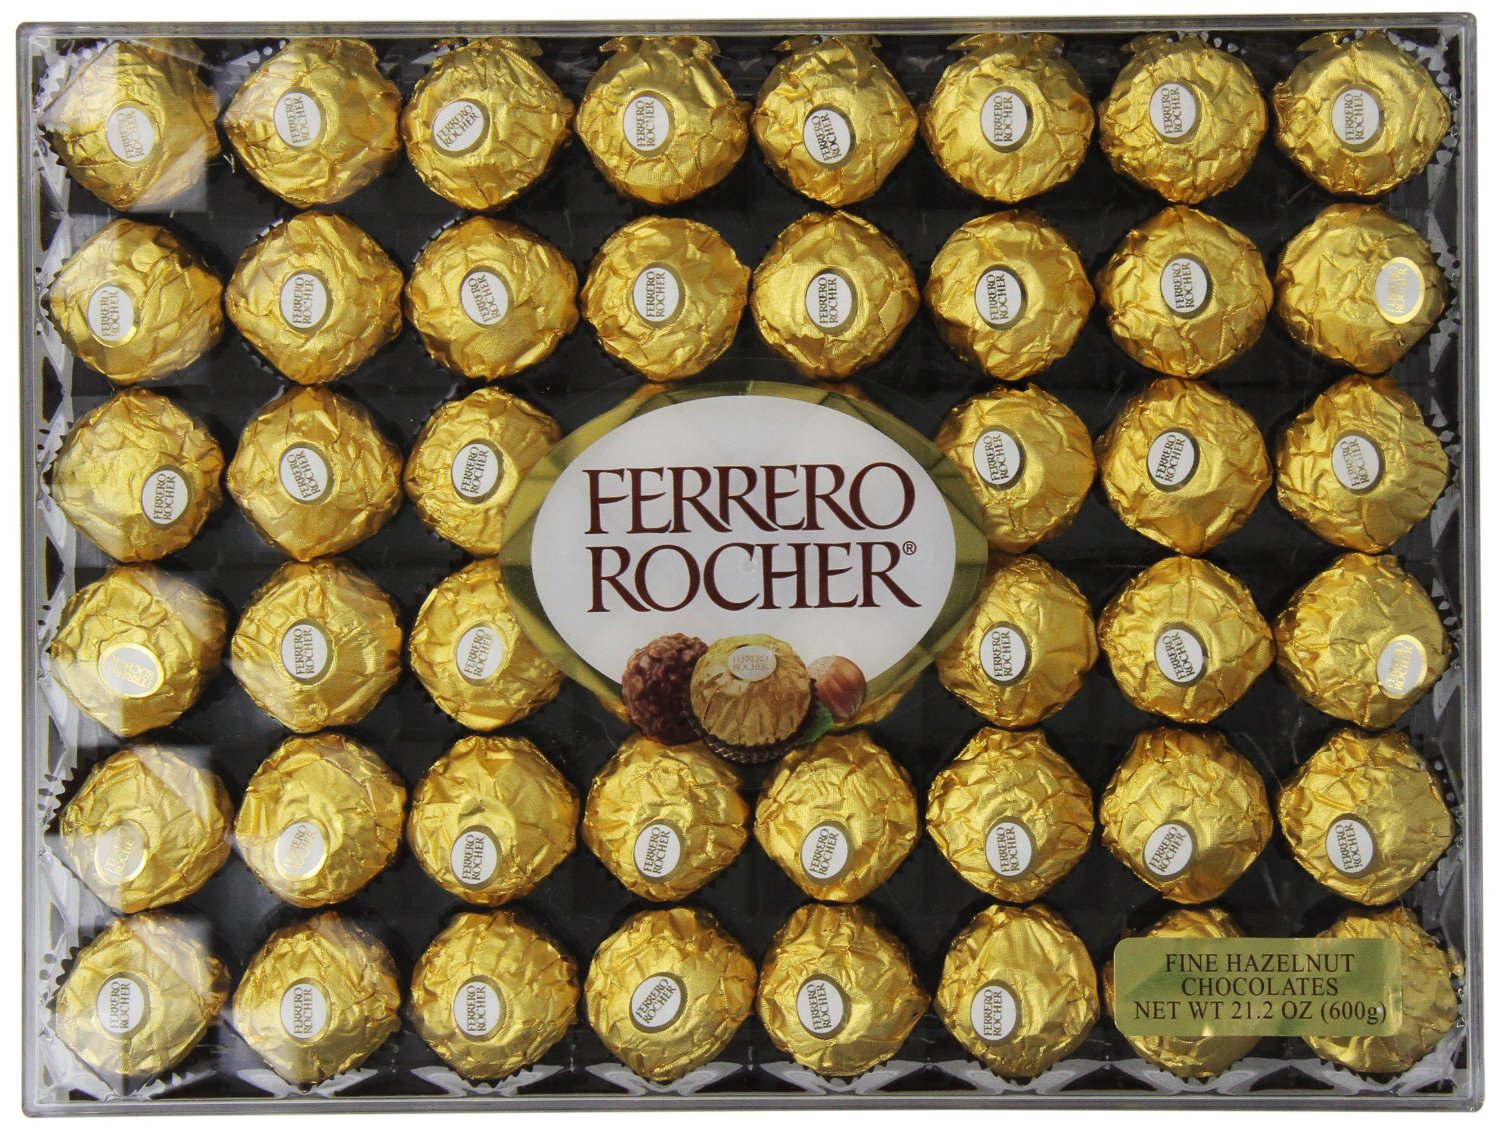 Ferrero Rocher Hazelnut Chocolates, 48 Count—$14.08!